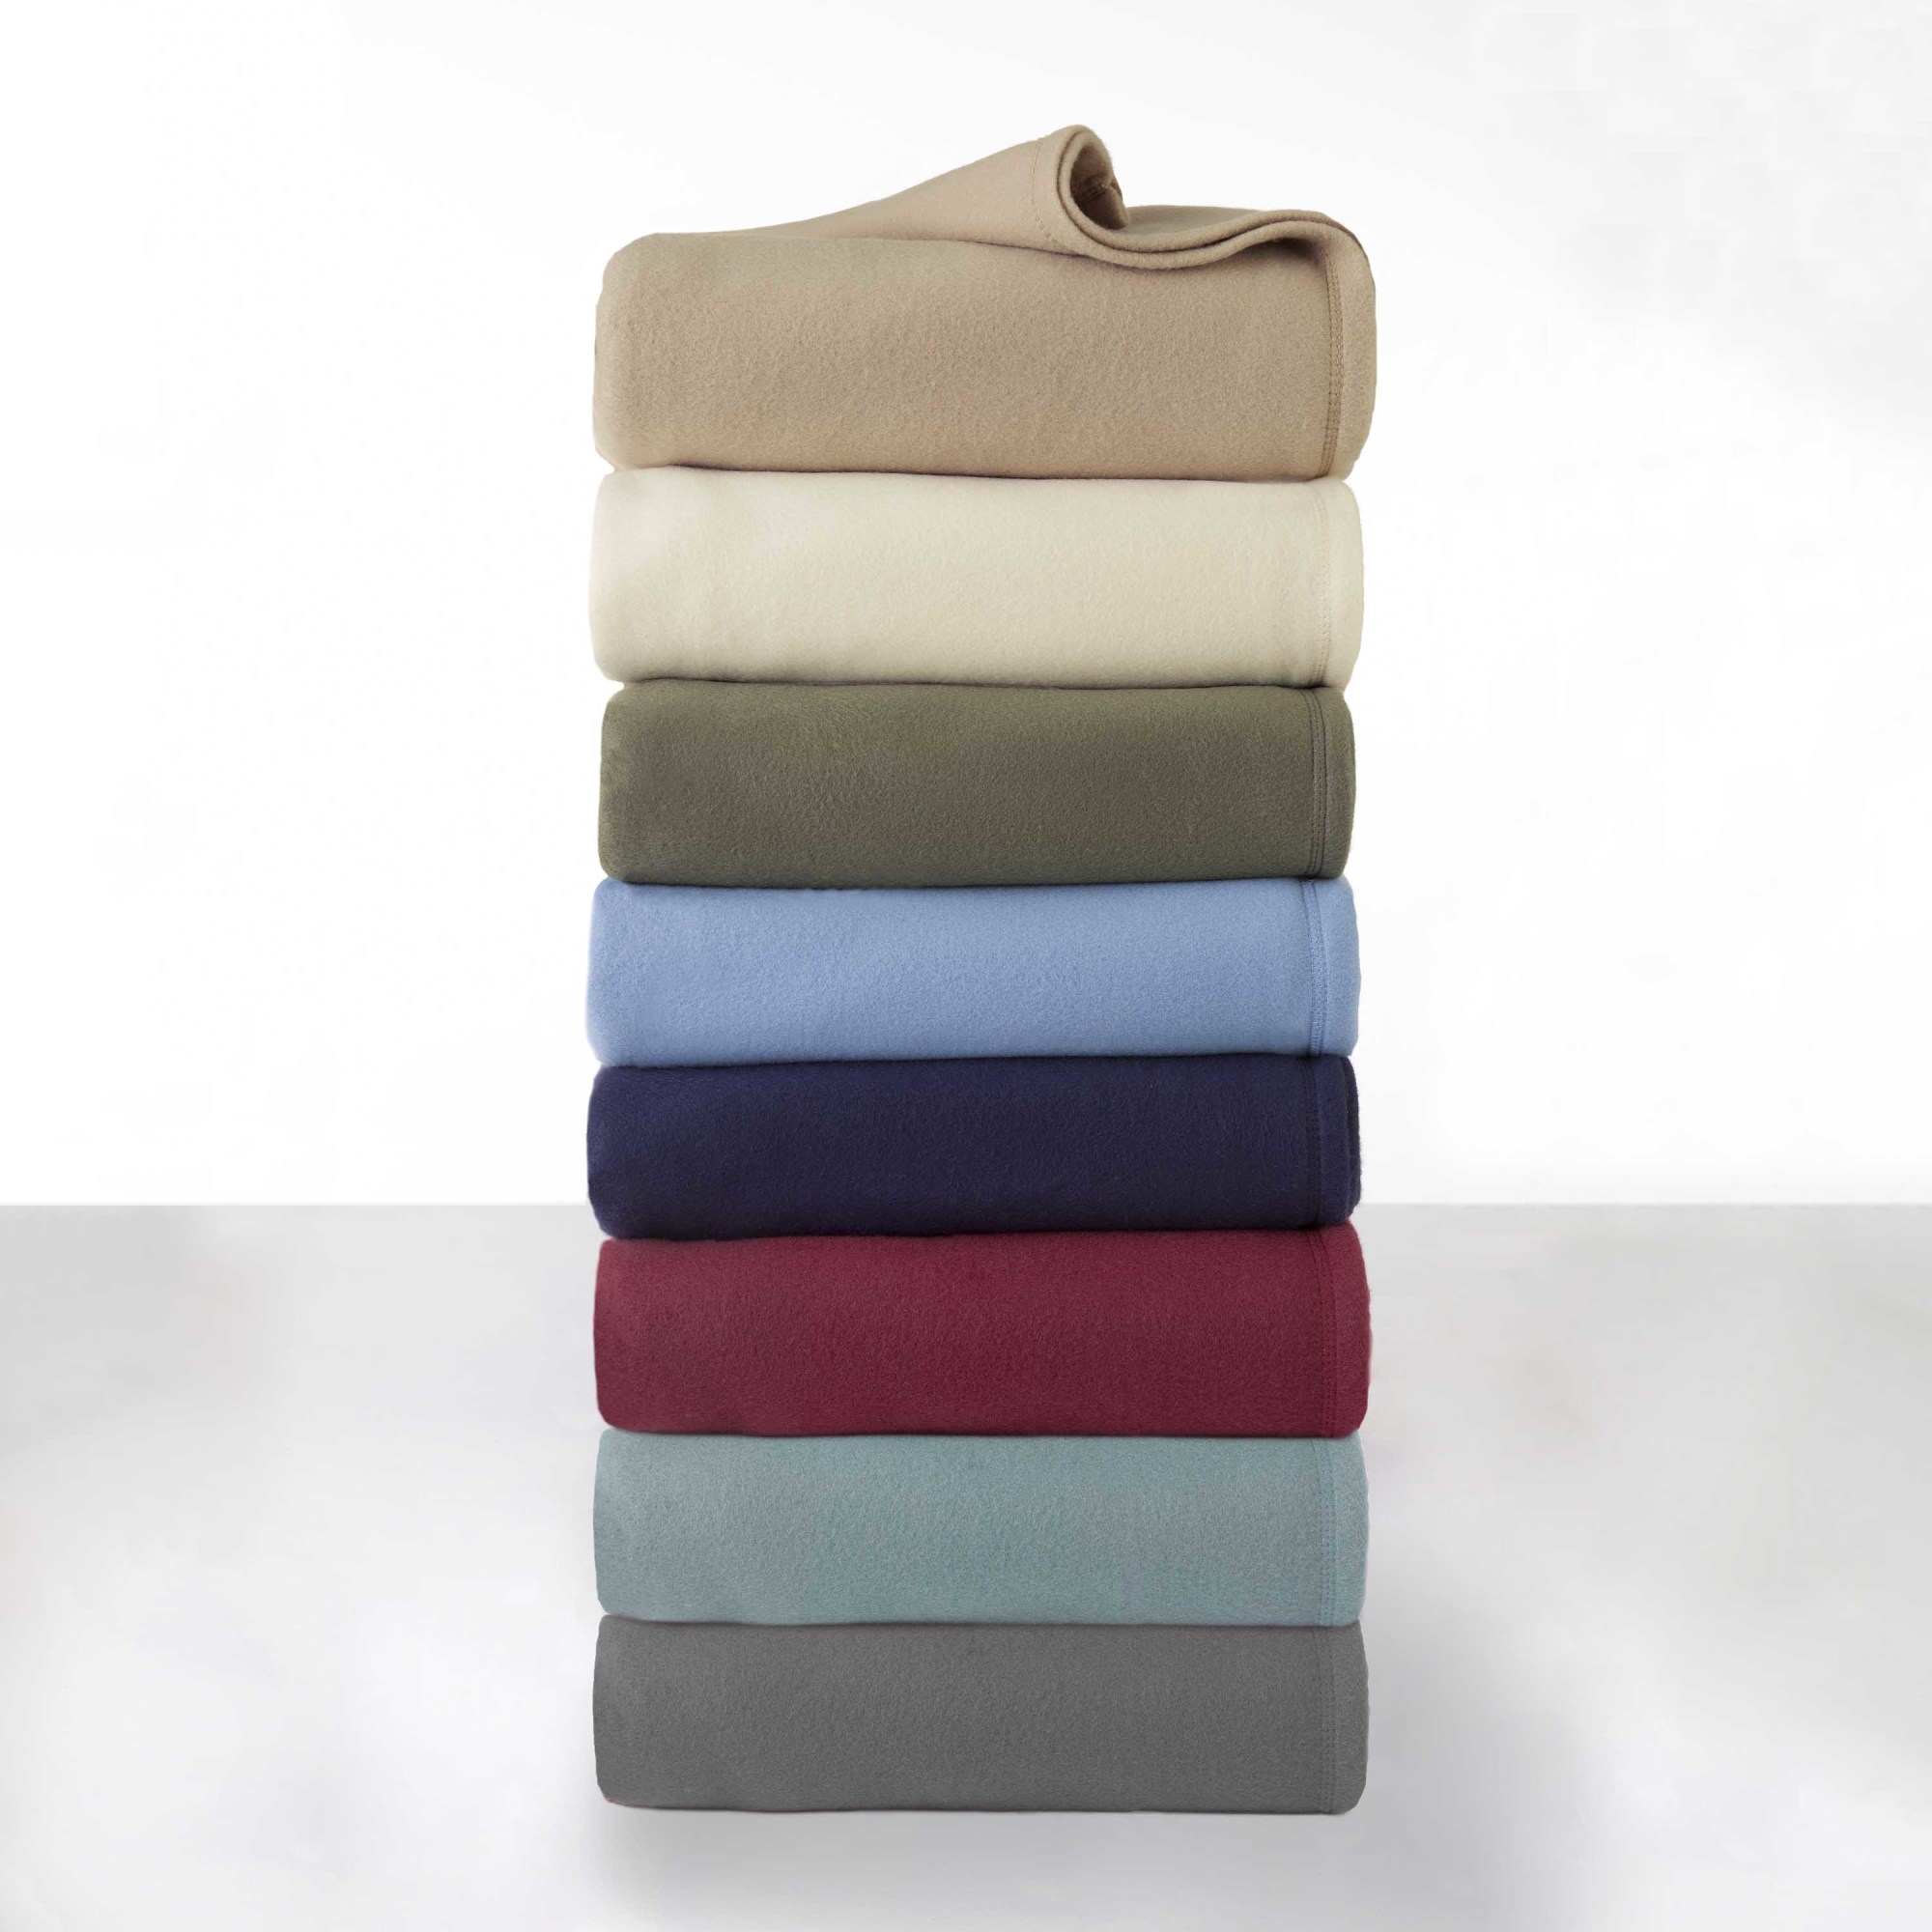 Martex Super Soft Fleece Blanket: westpointhome.com